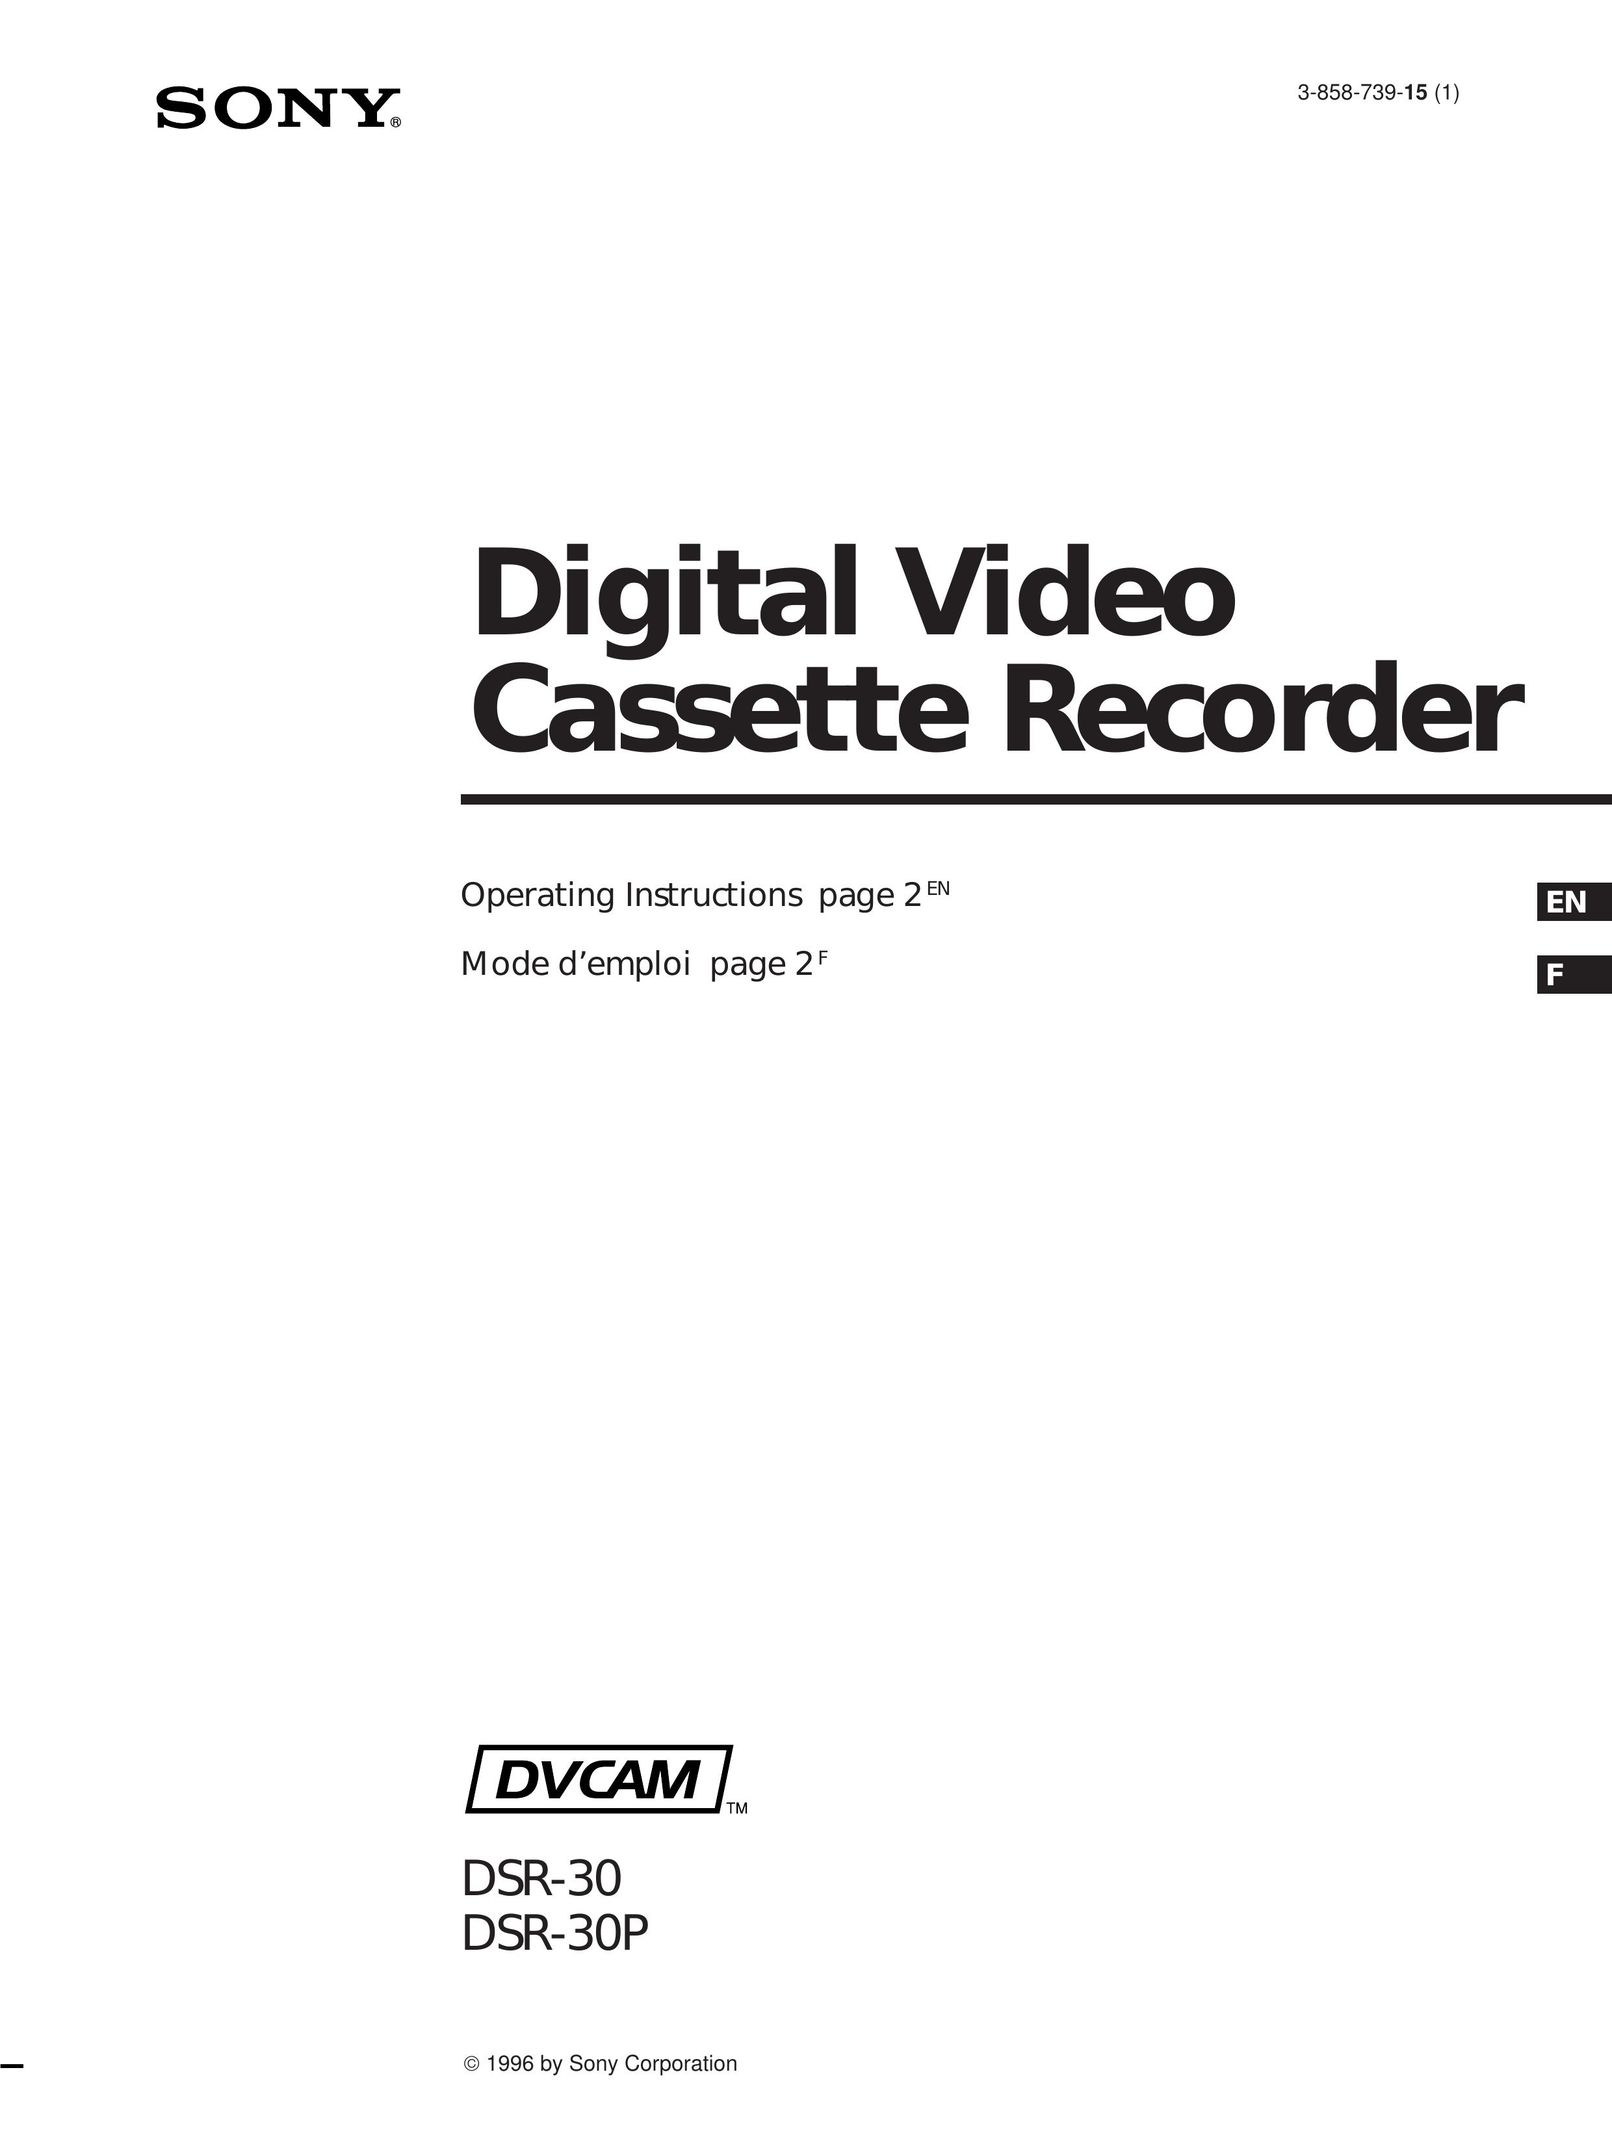 Sony DSR-30 VCR User Manual